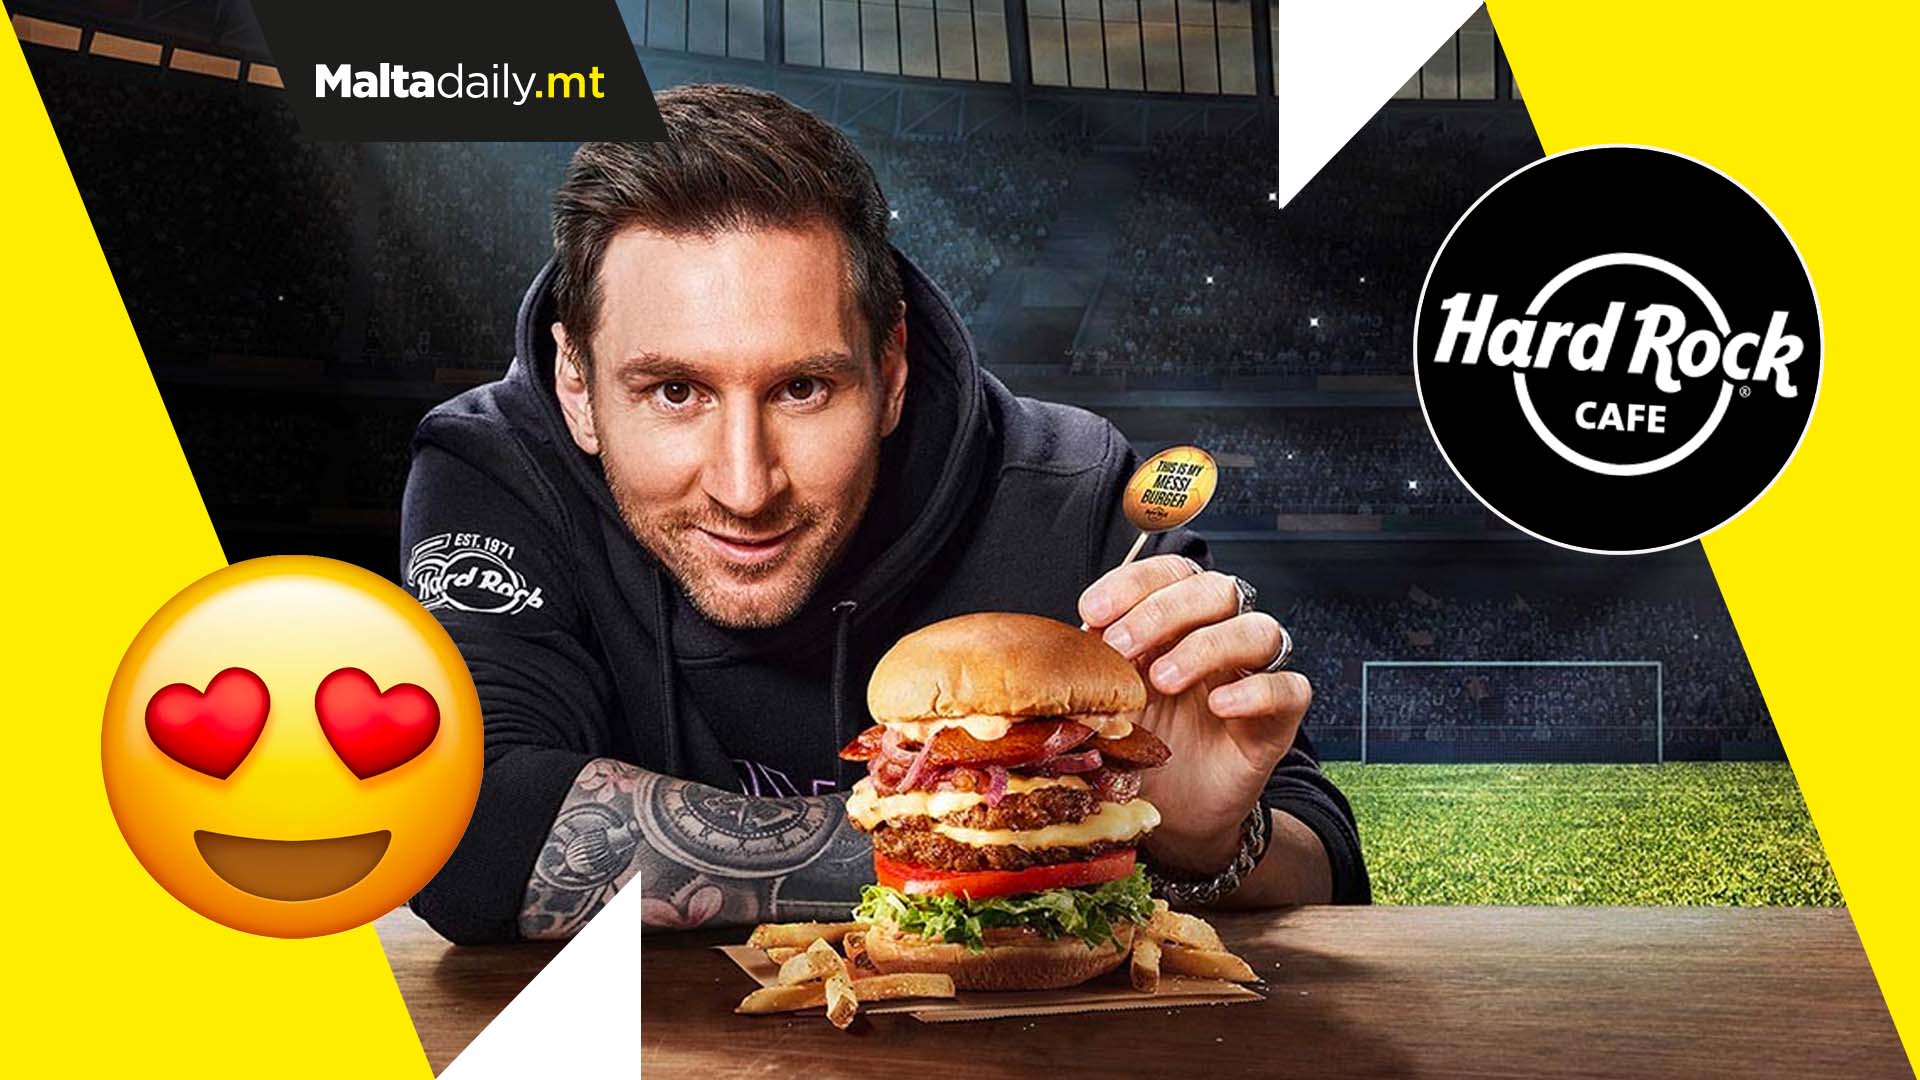 Hard Rock Cafe’s new burger is inspired by brand ambassador Lionel Messi